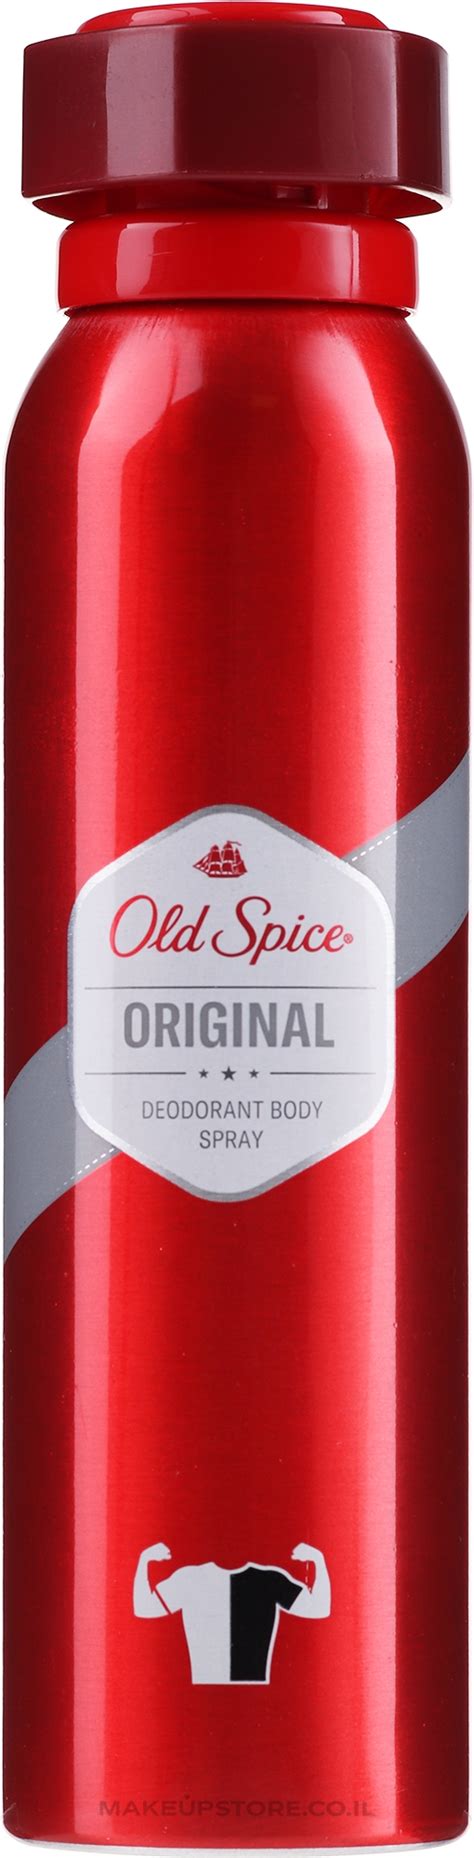 Old Spice Original Deodorant Body Spray Deodorant Spray Makeupstore